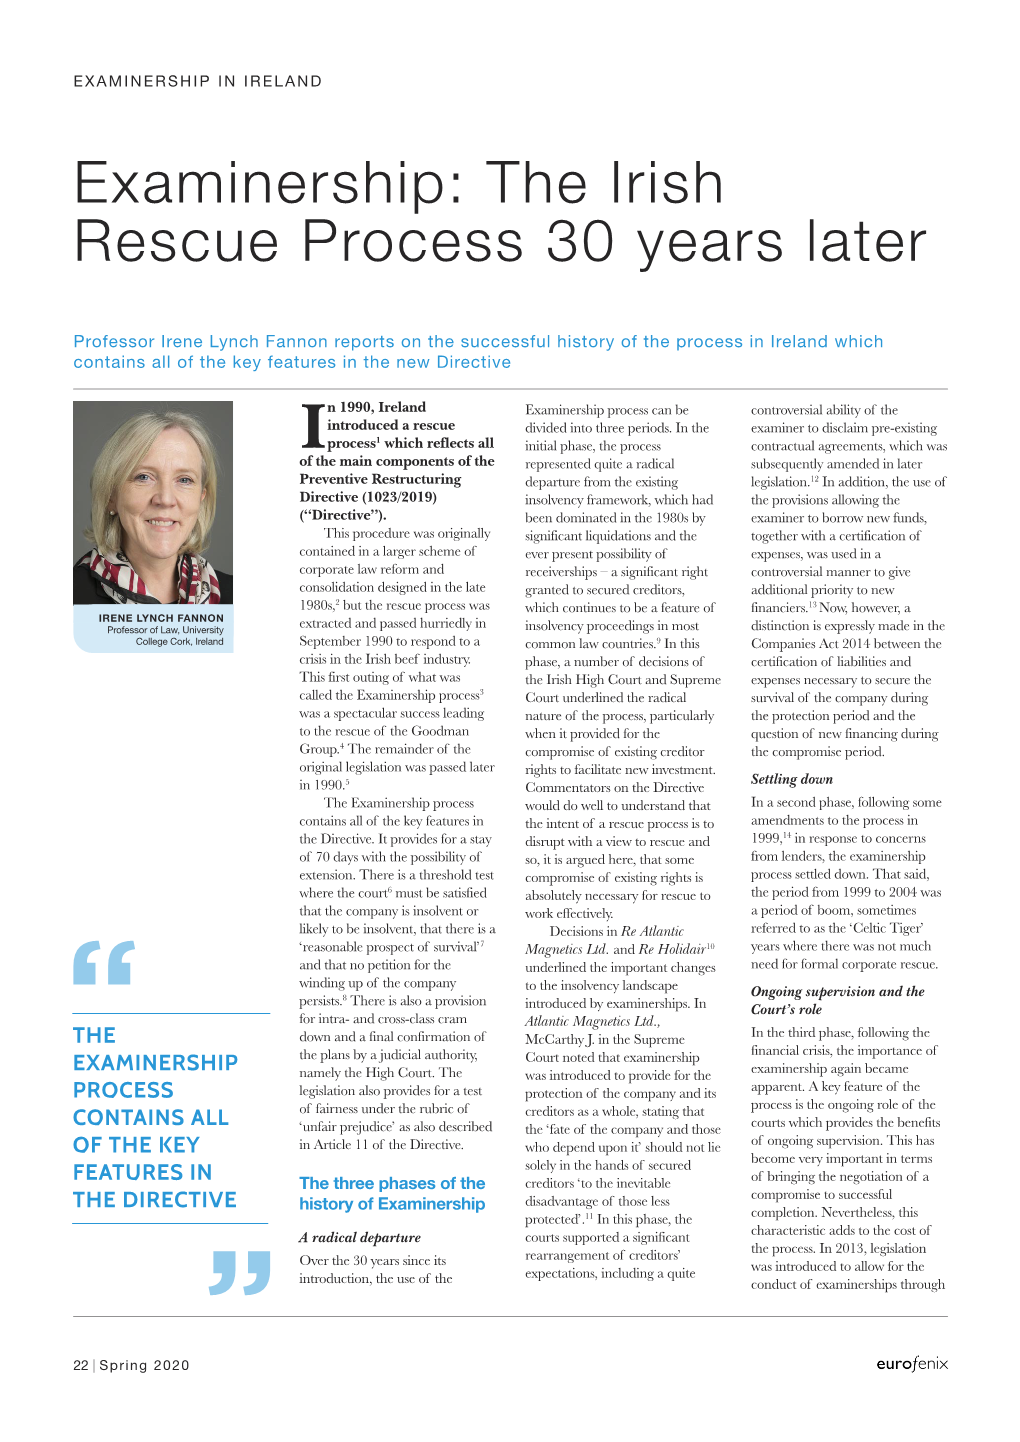 Examinership: the Irish Rescue Process 30 Years Later